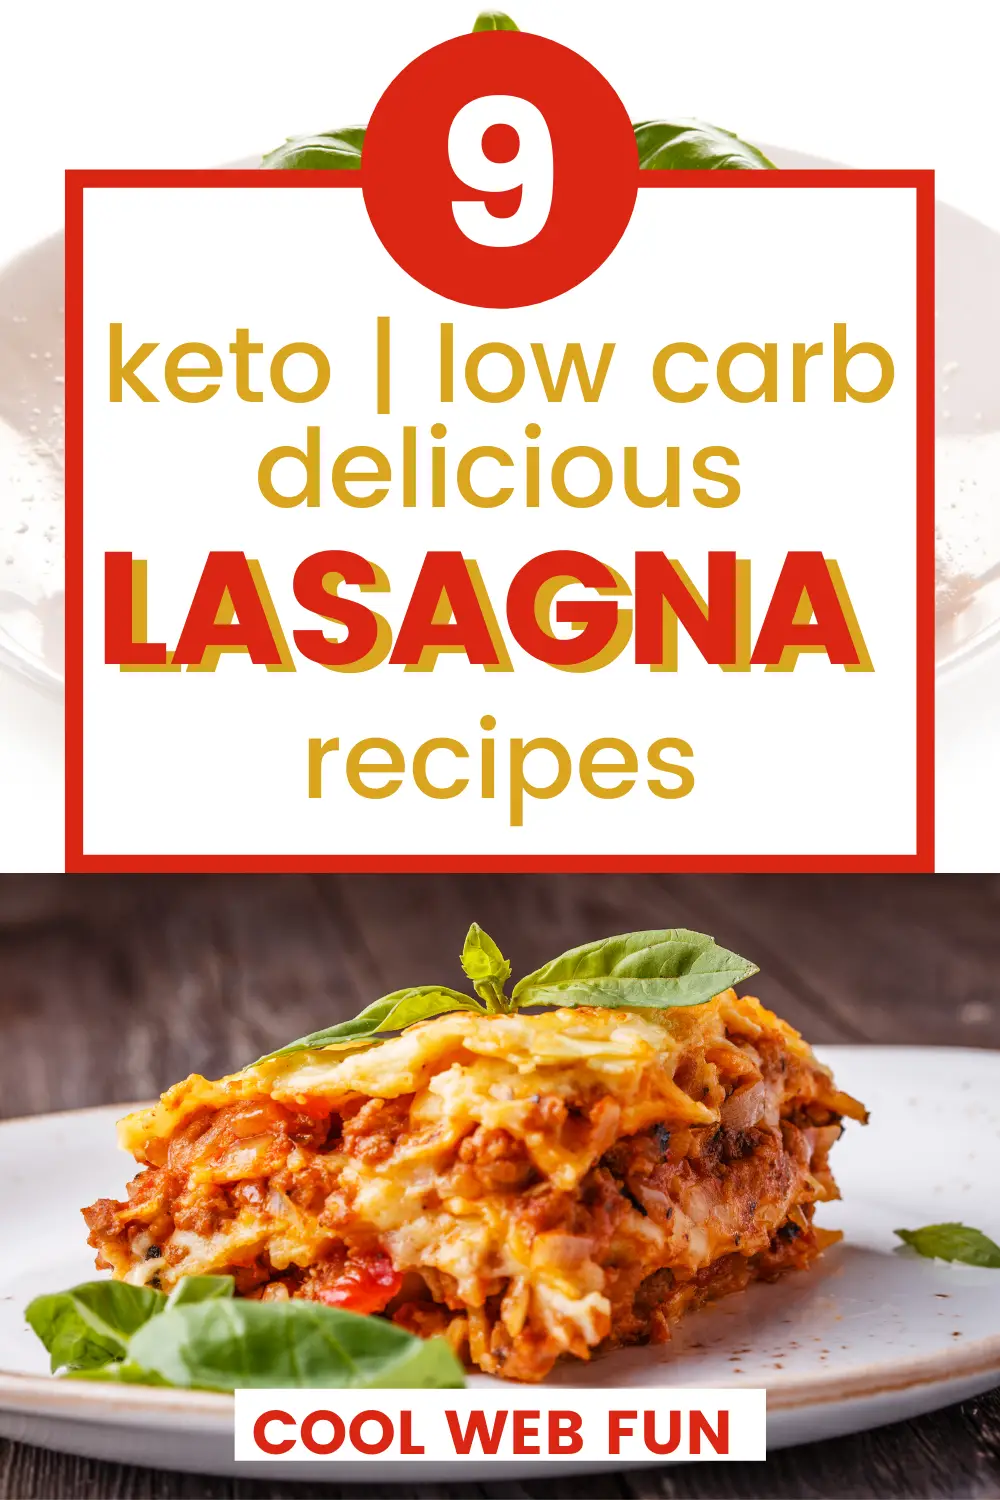 keto lasagna - Cool Web Fun